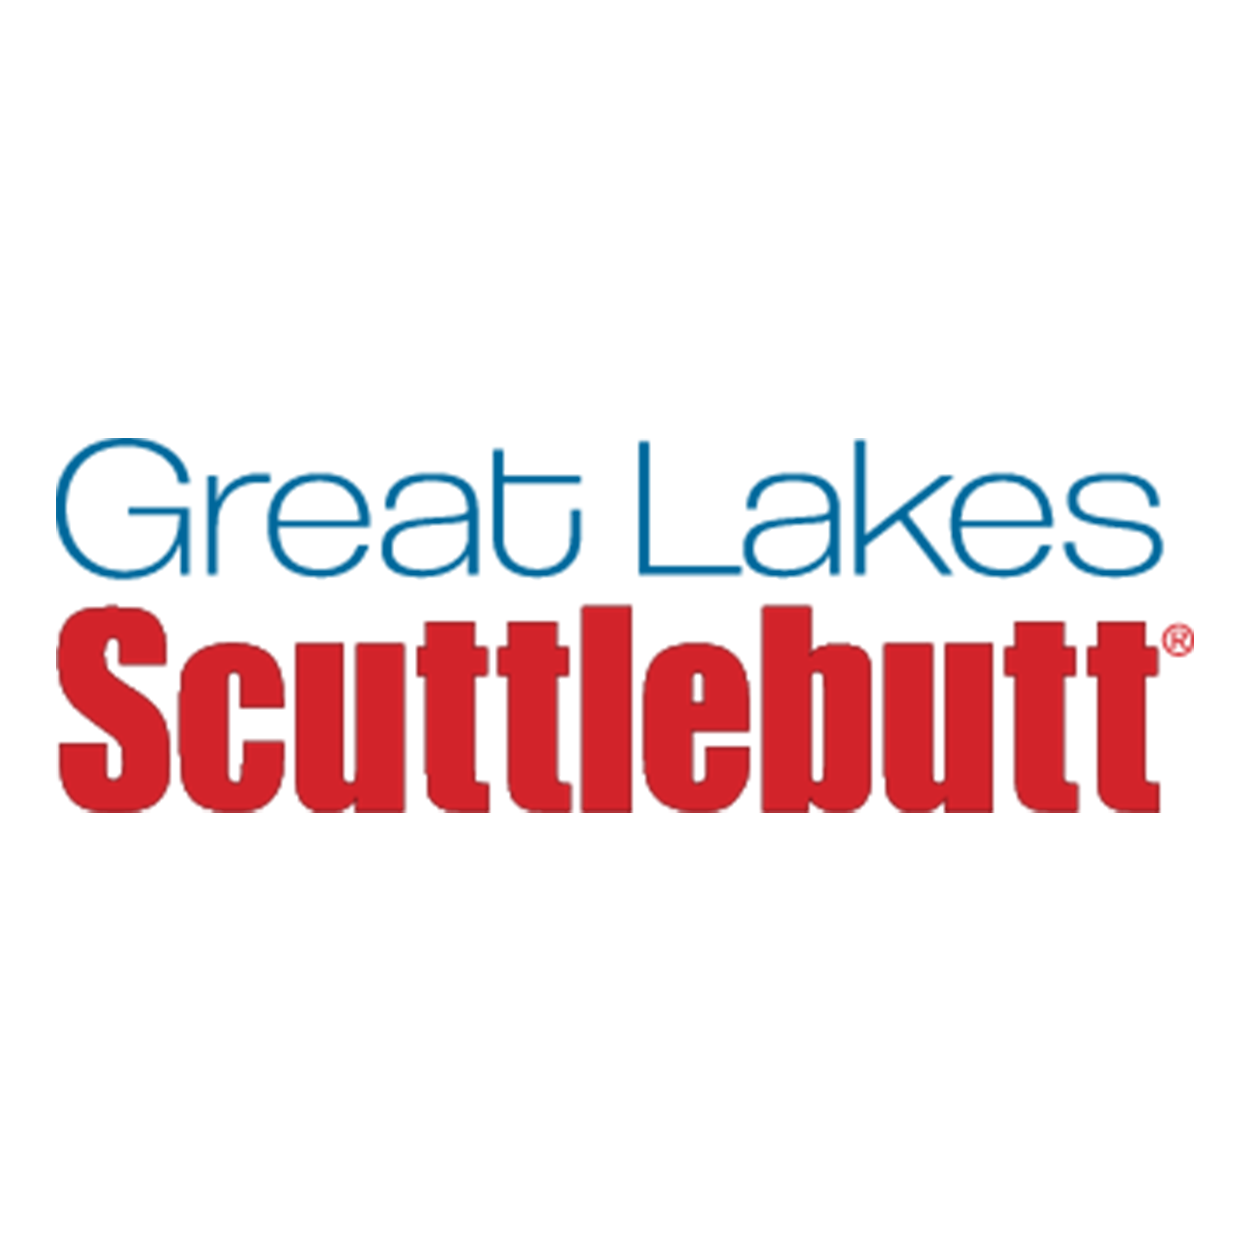 Great Lakes Scuttlebutt logo